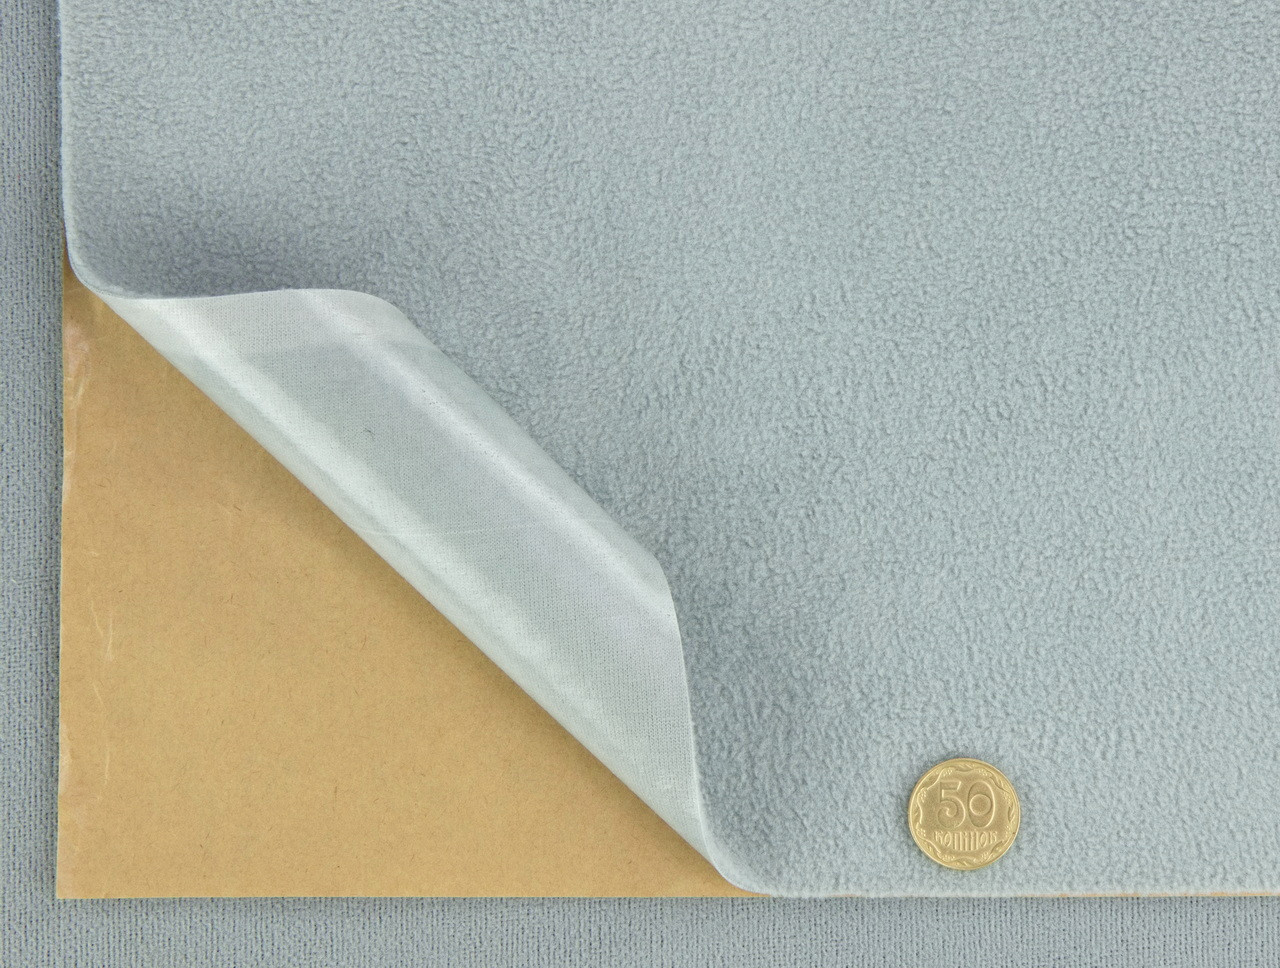 Карпет велюровий Standart сірий для авто самоклейка, (лист), товщина 2мм анонс фото